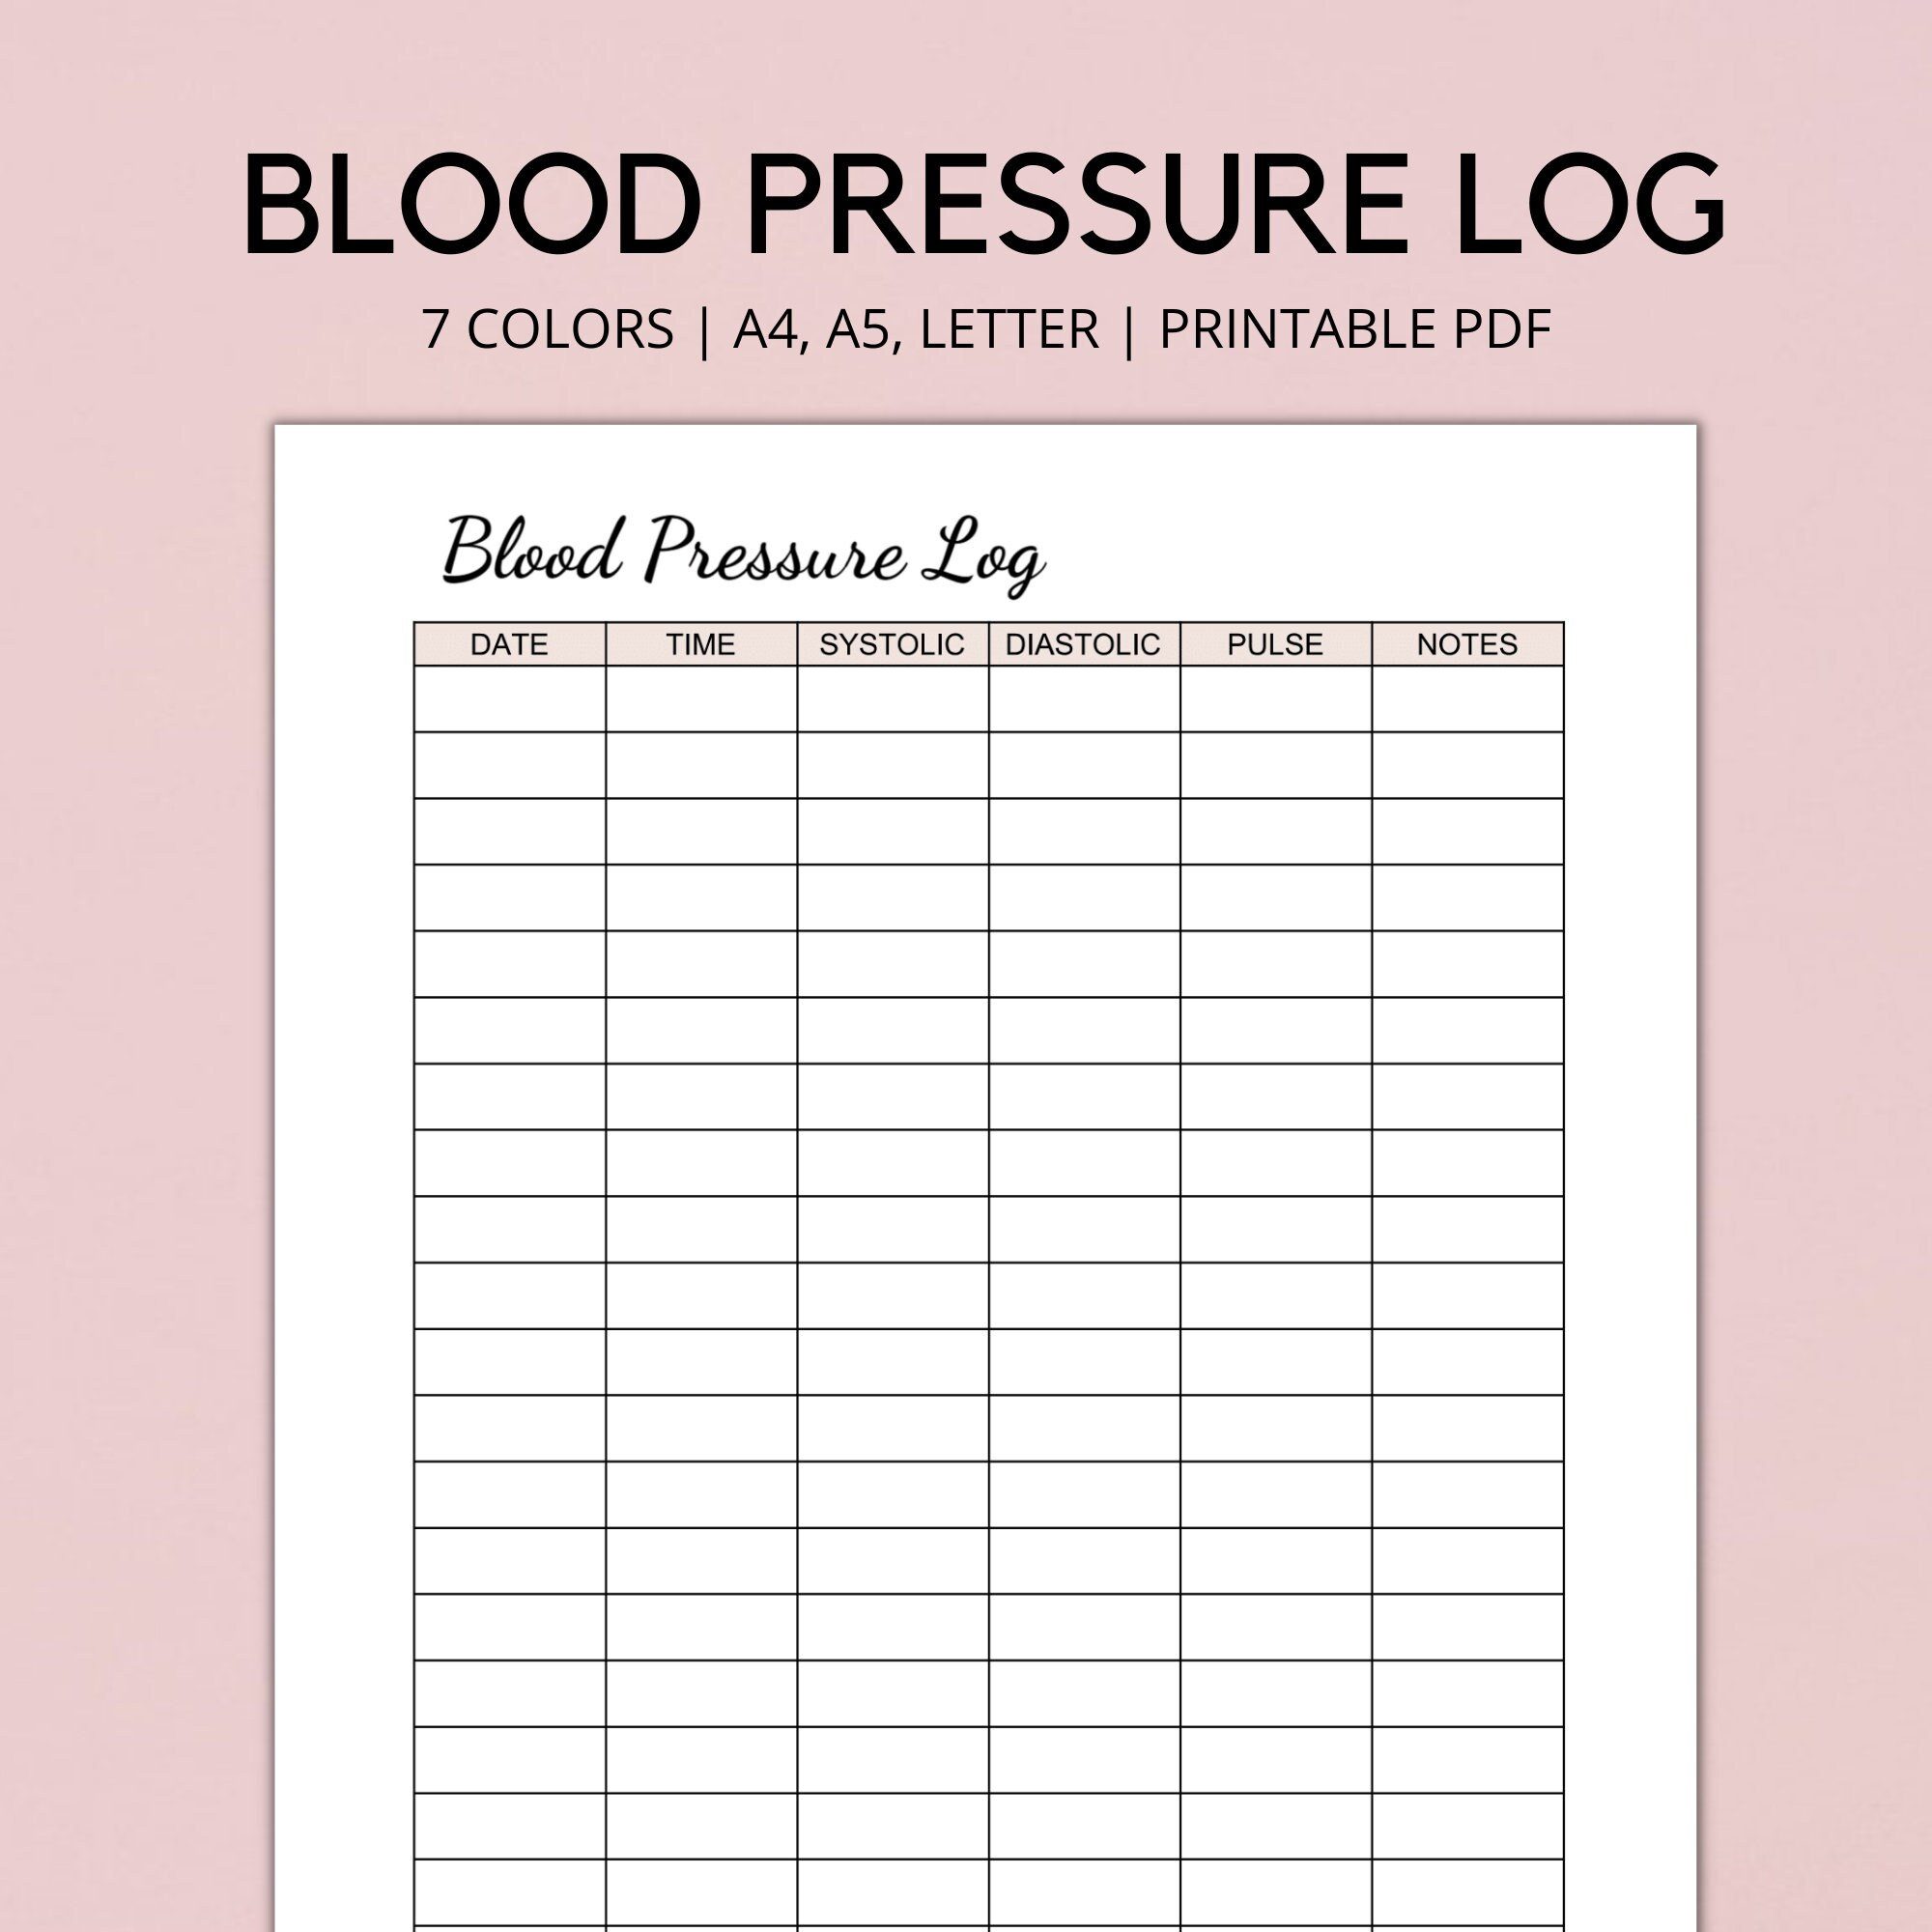 Blood pressure chart